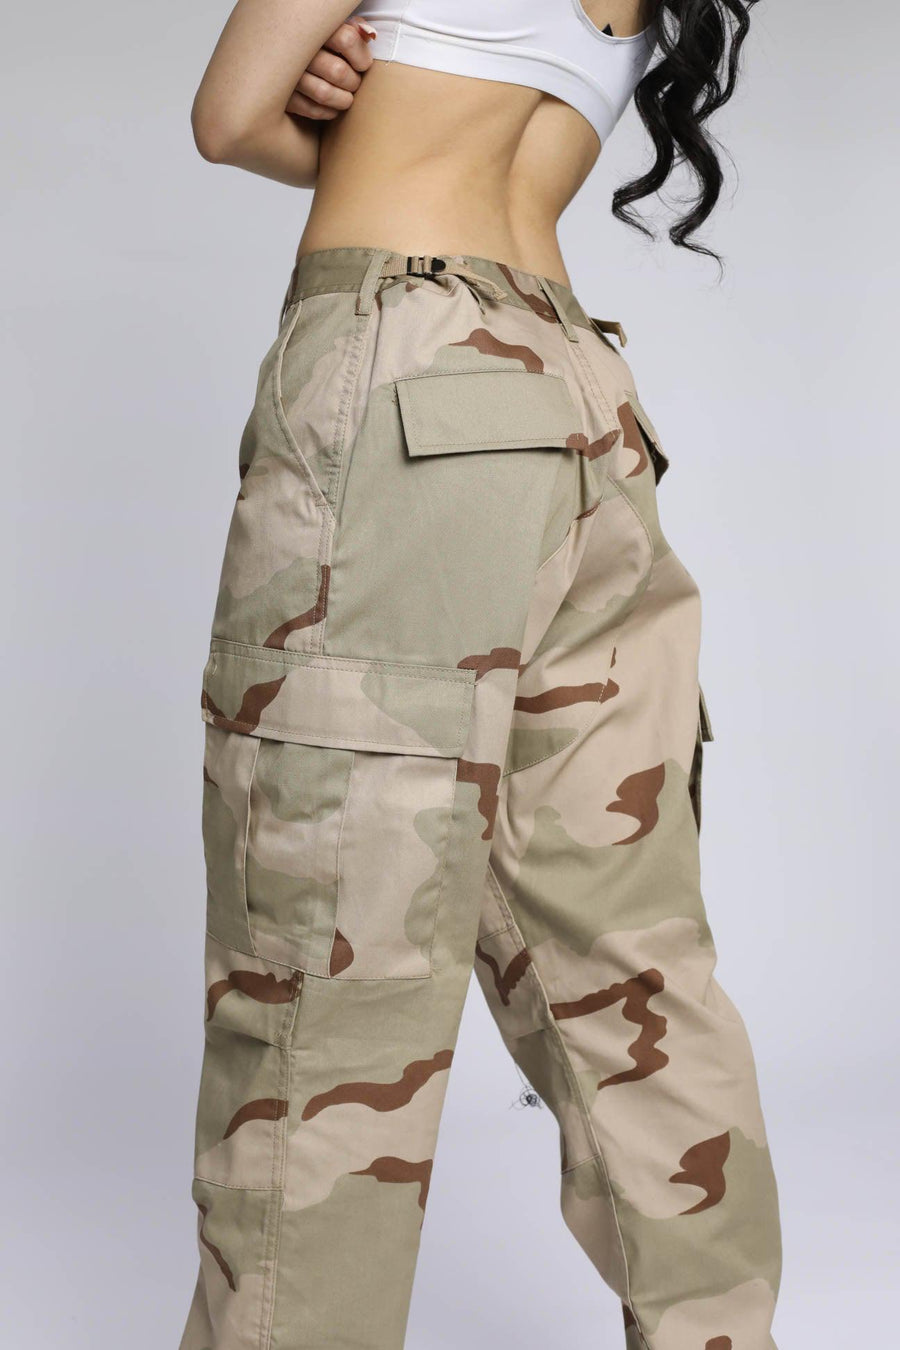 Desert Camo BDU Pants - S, M, XL